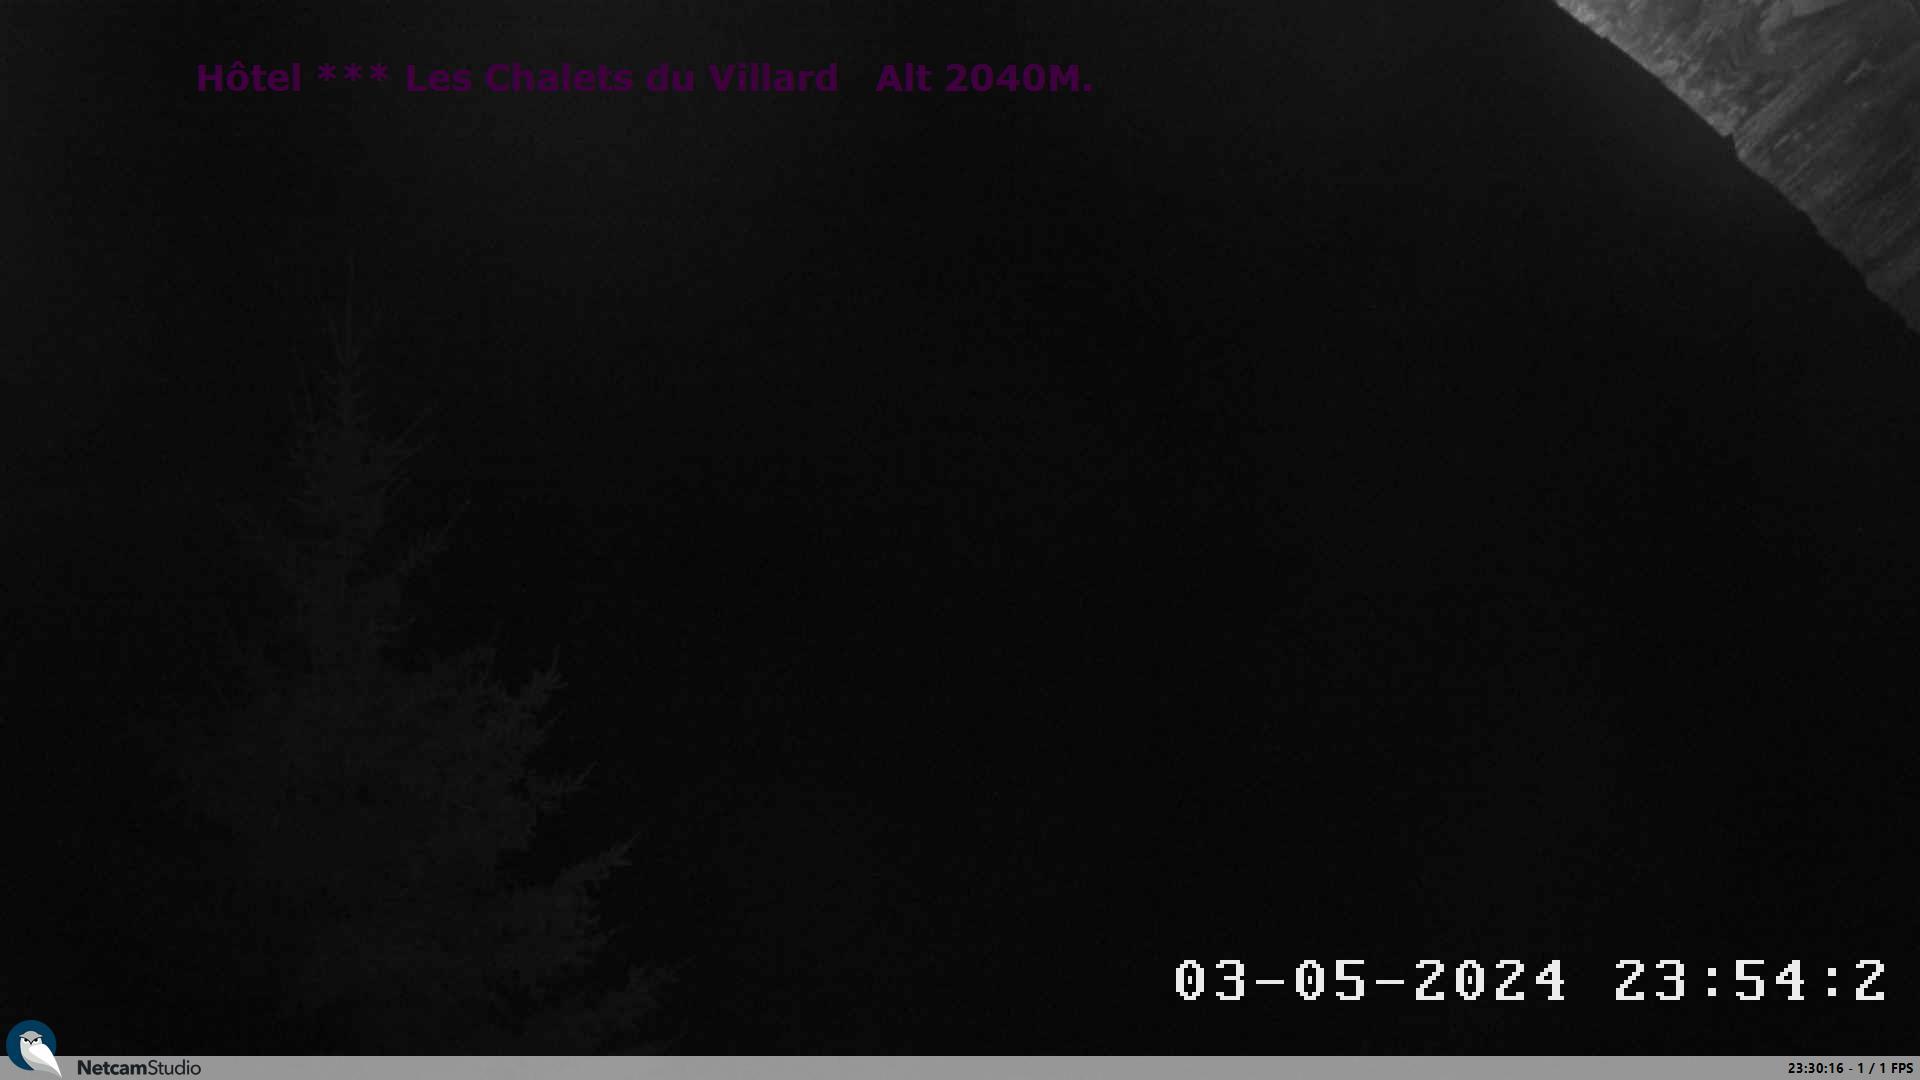 Saint-Véran: Hôtel les Chalets du Villard